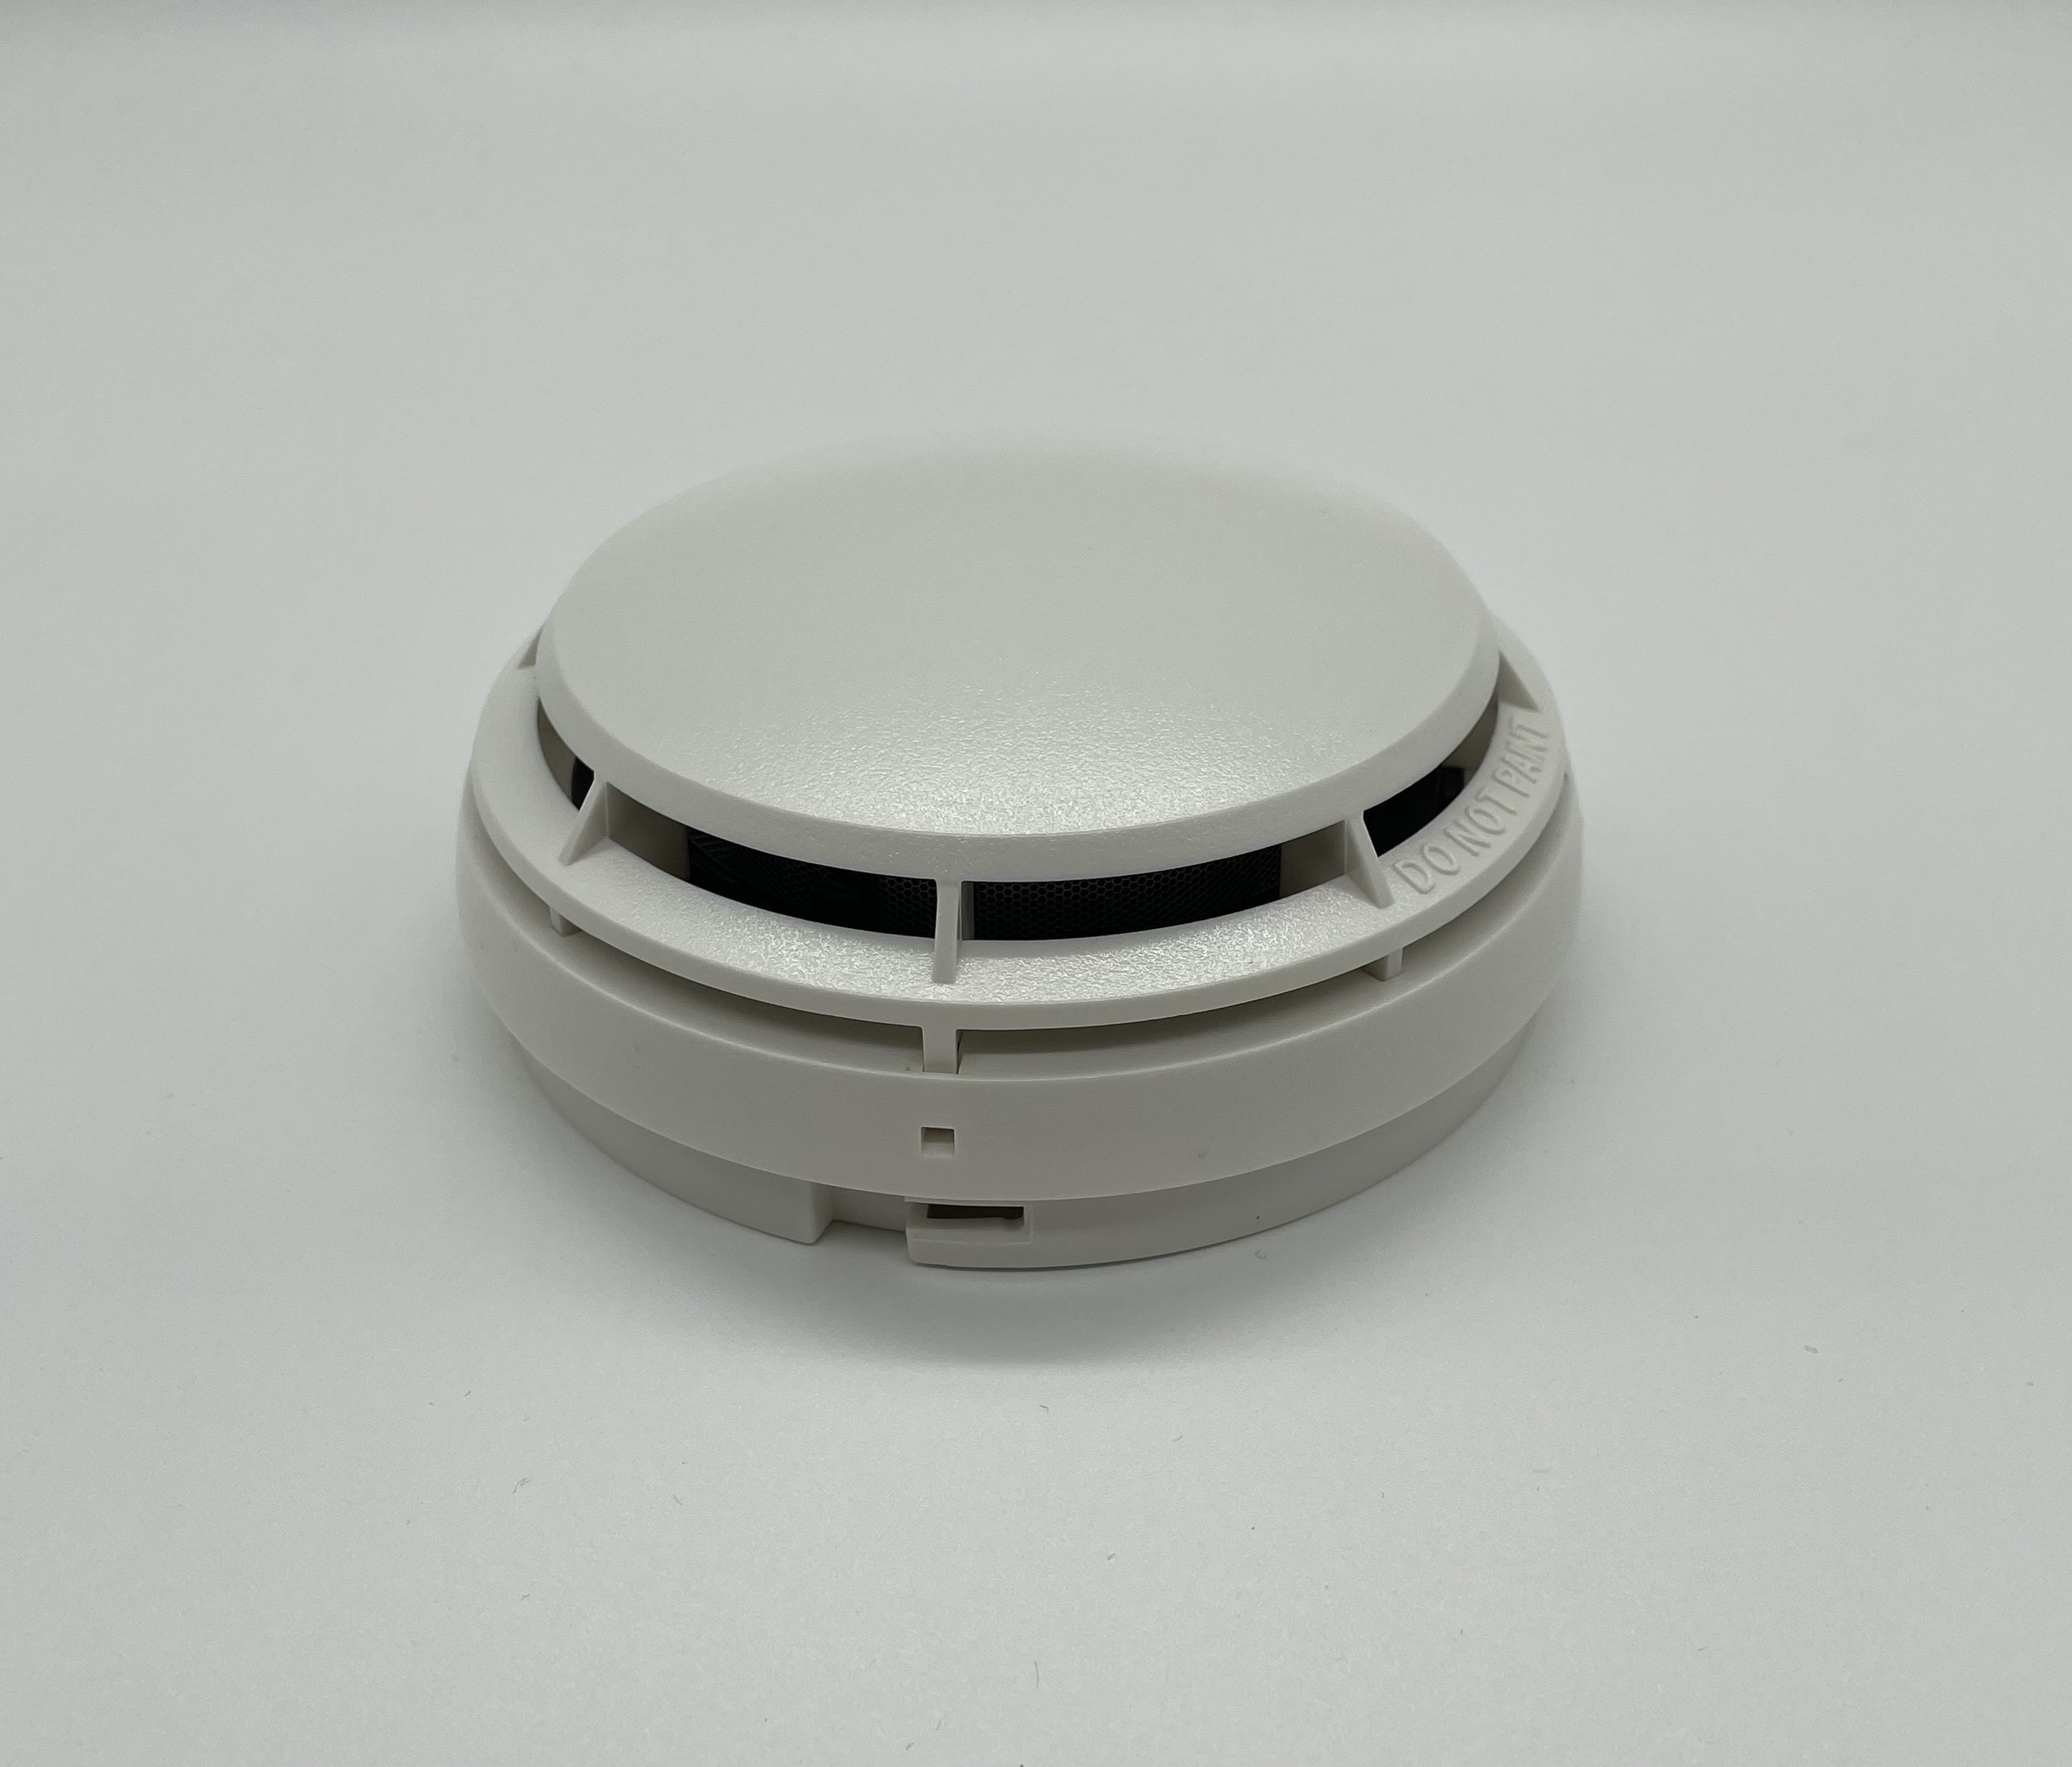 Simplex Time Recorder TrueAlarm Photoelectric Smoke Sensor 4098-9714 